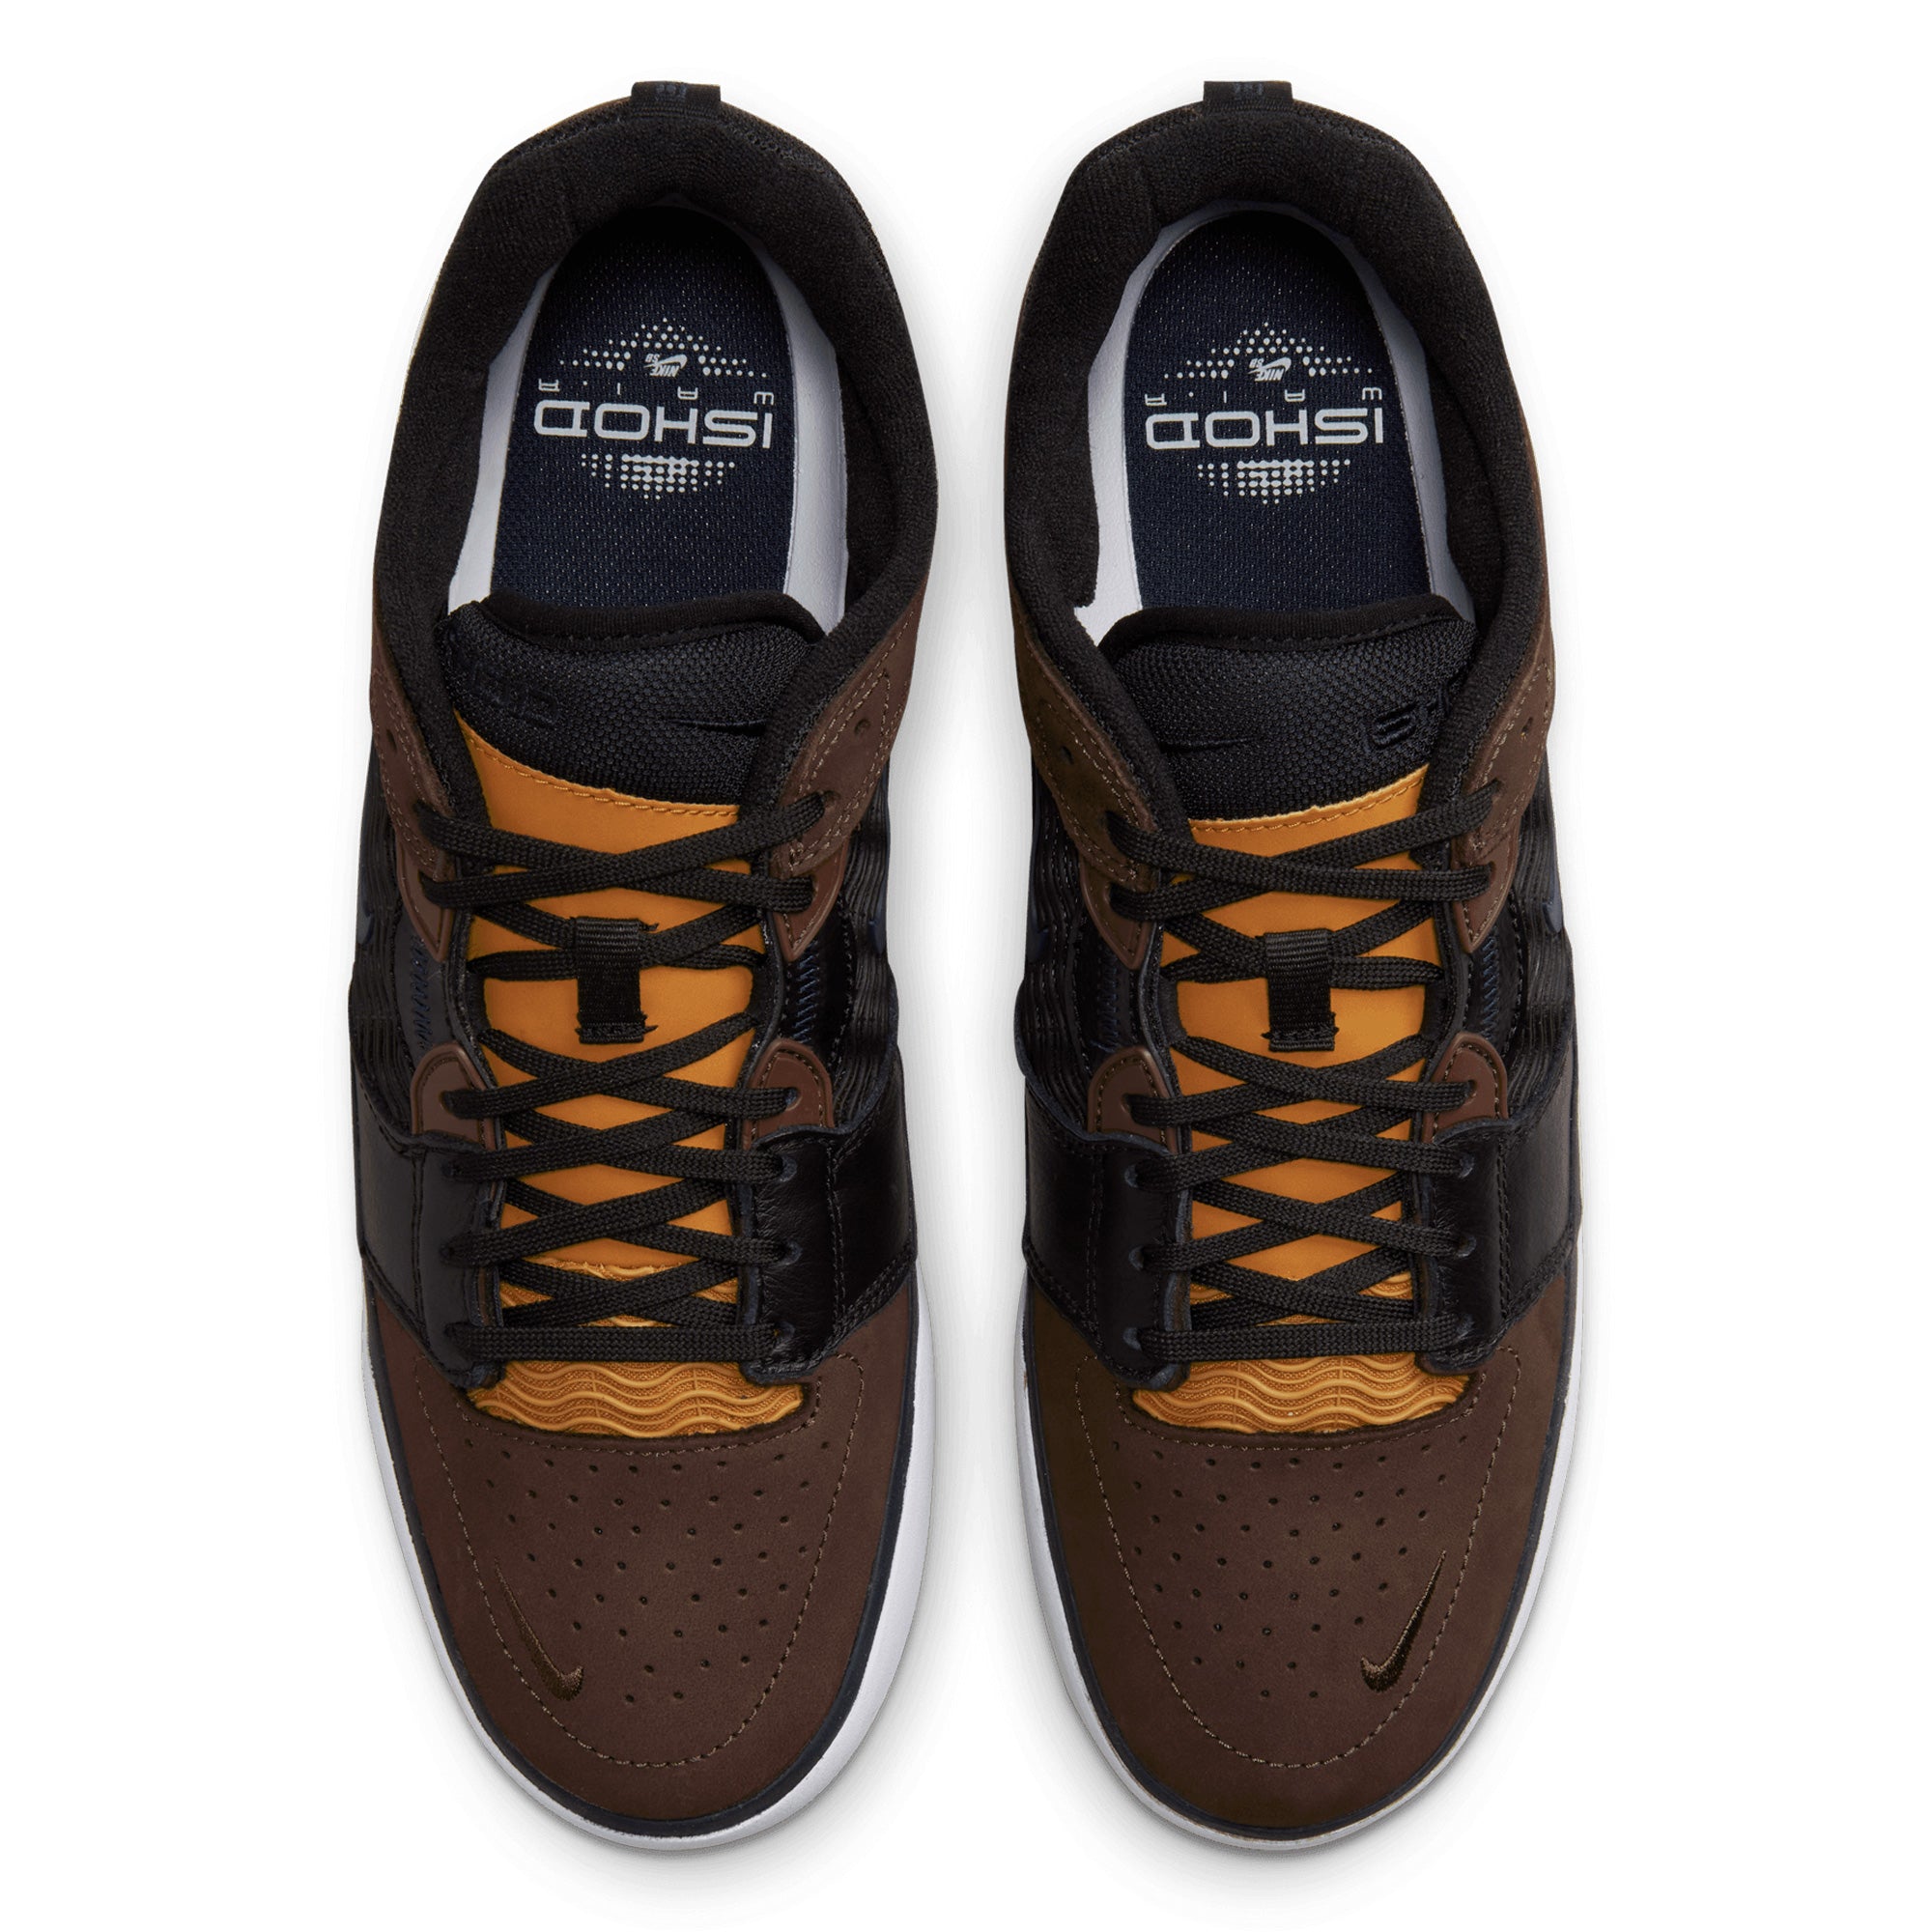 Nike SB Ishod Premium Pro Shoe - Baroque Brown/Obsidian-Black